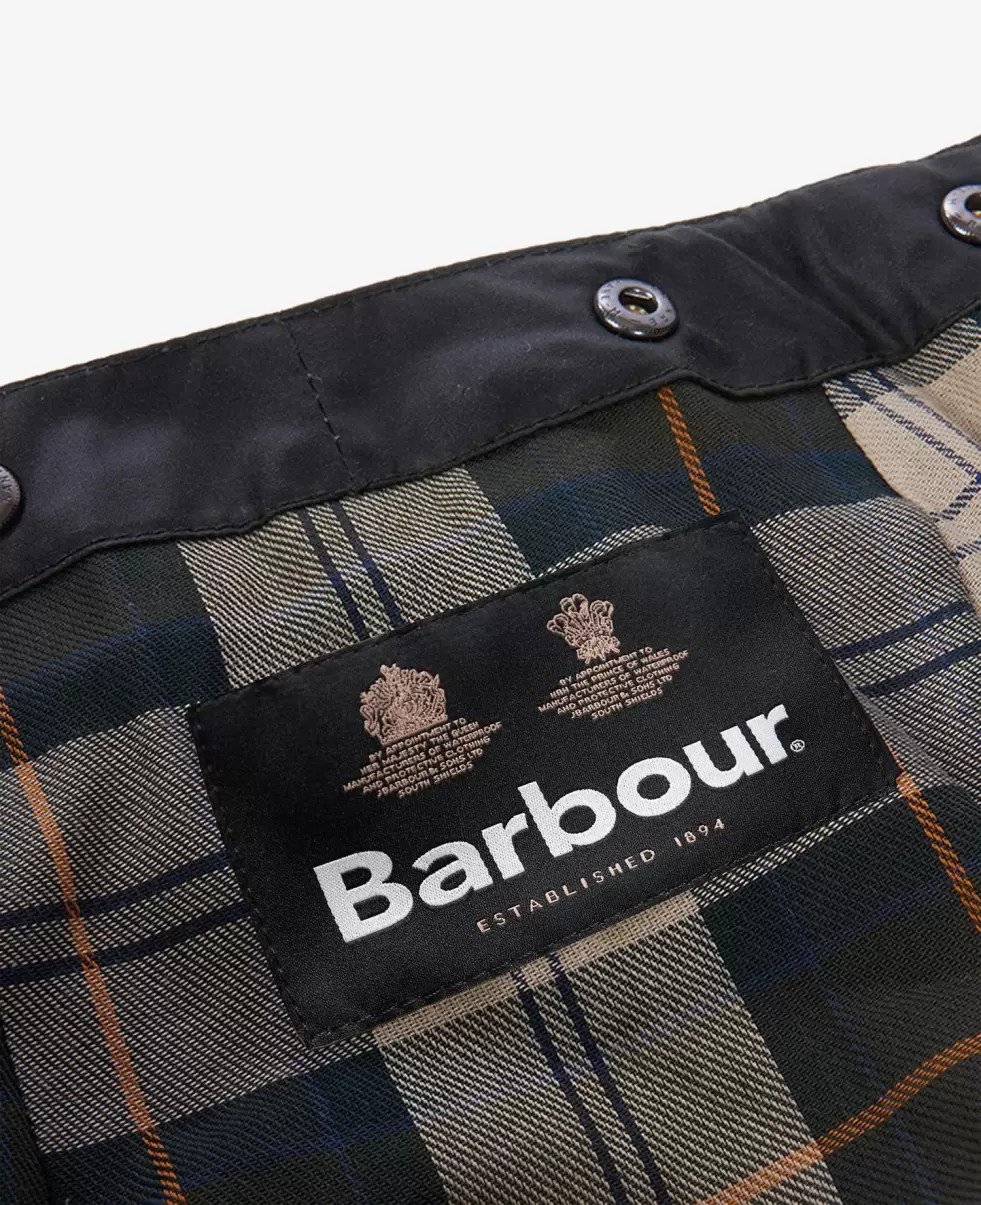 Barbour Wax Cotton Hood Black Accessories Last Chance Hoods & Liners - 2